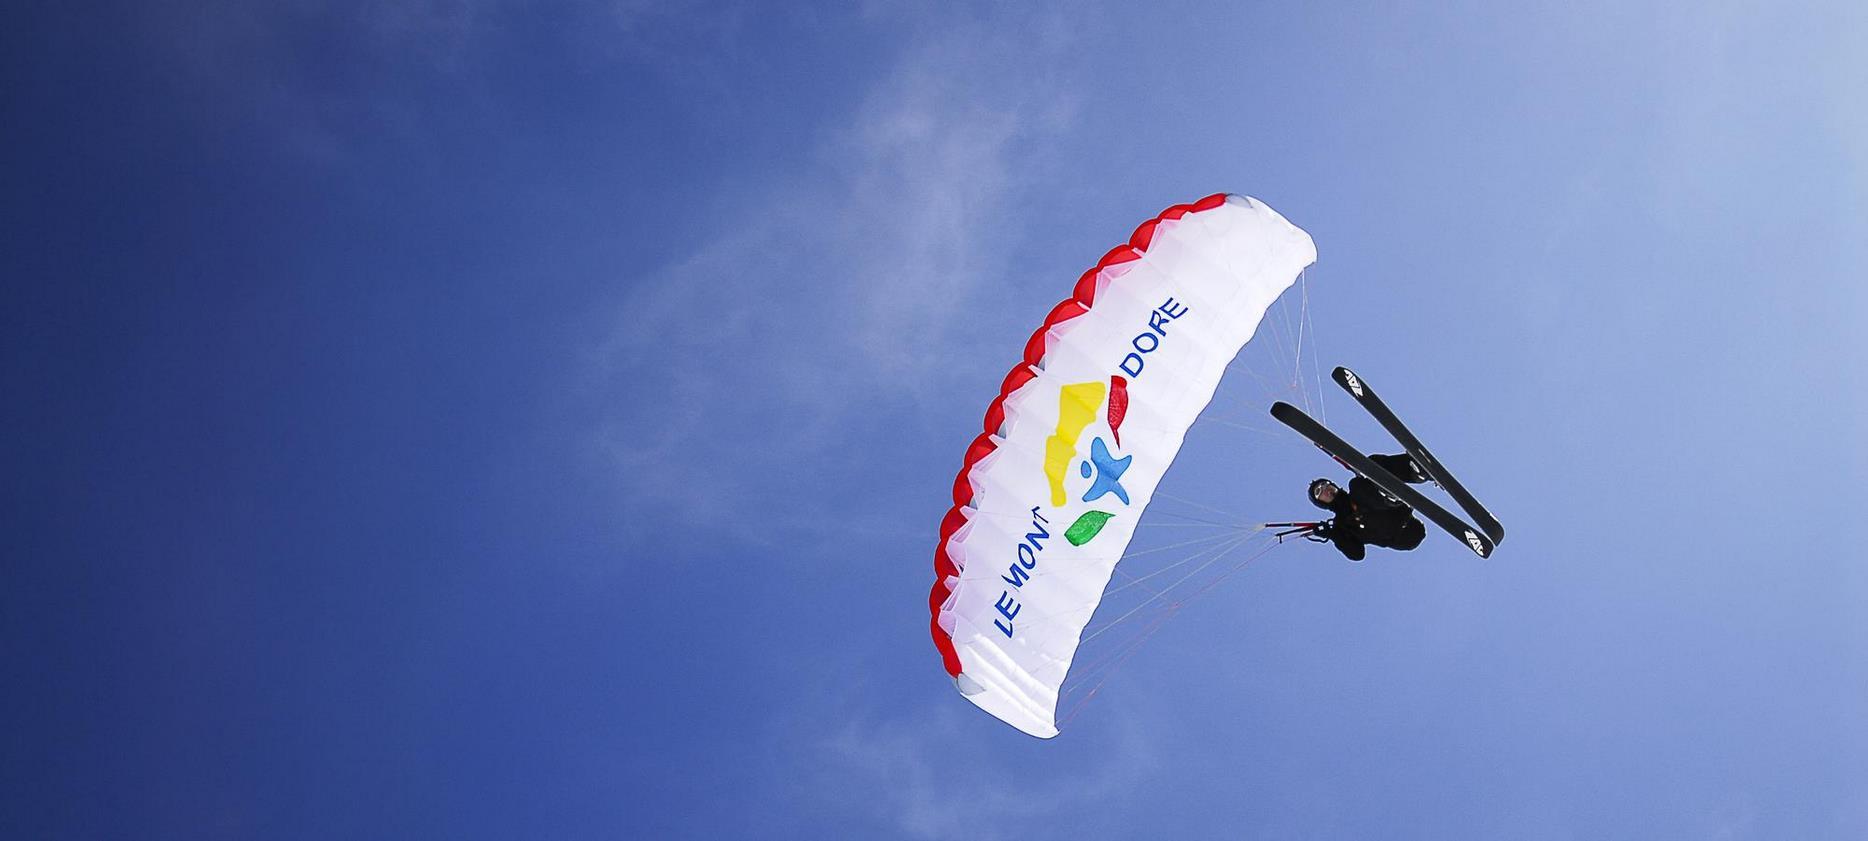 Super Besse - Paragliding at Mont dore on Skis